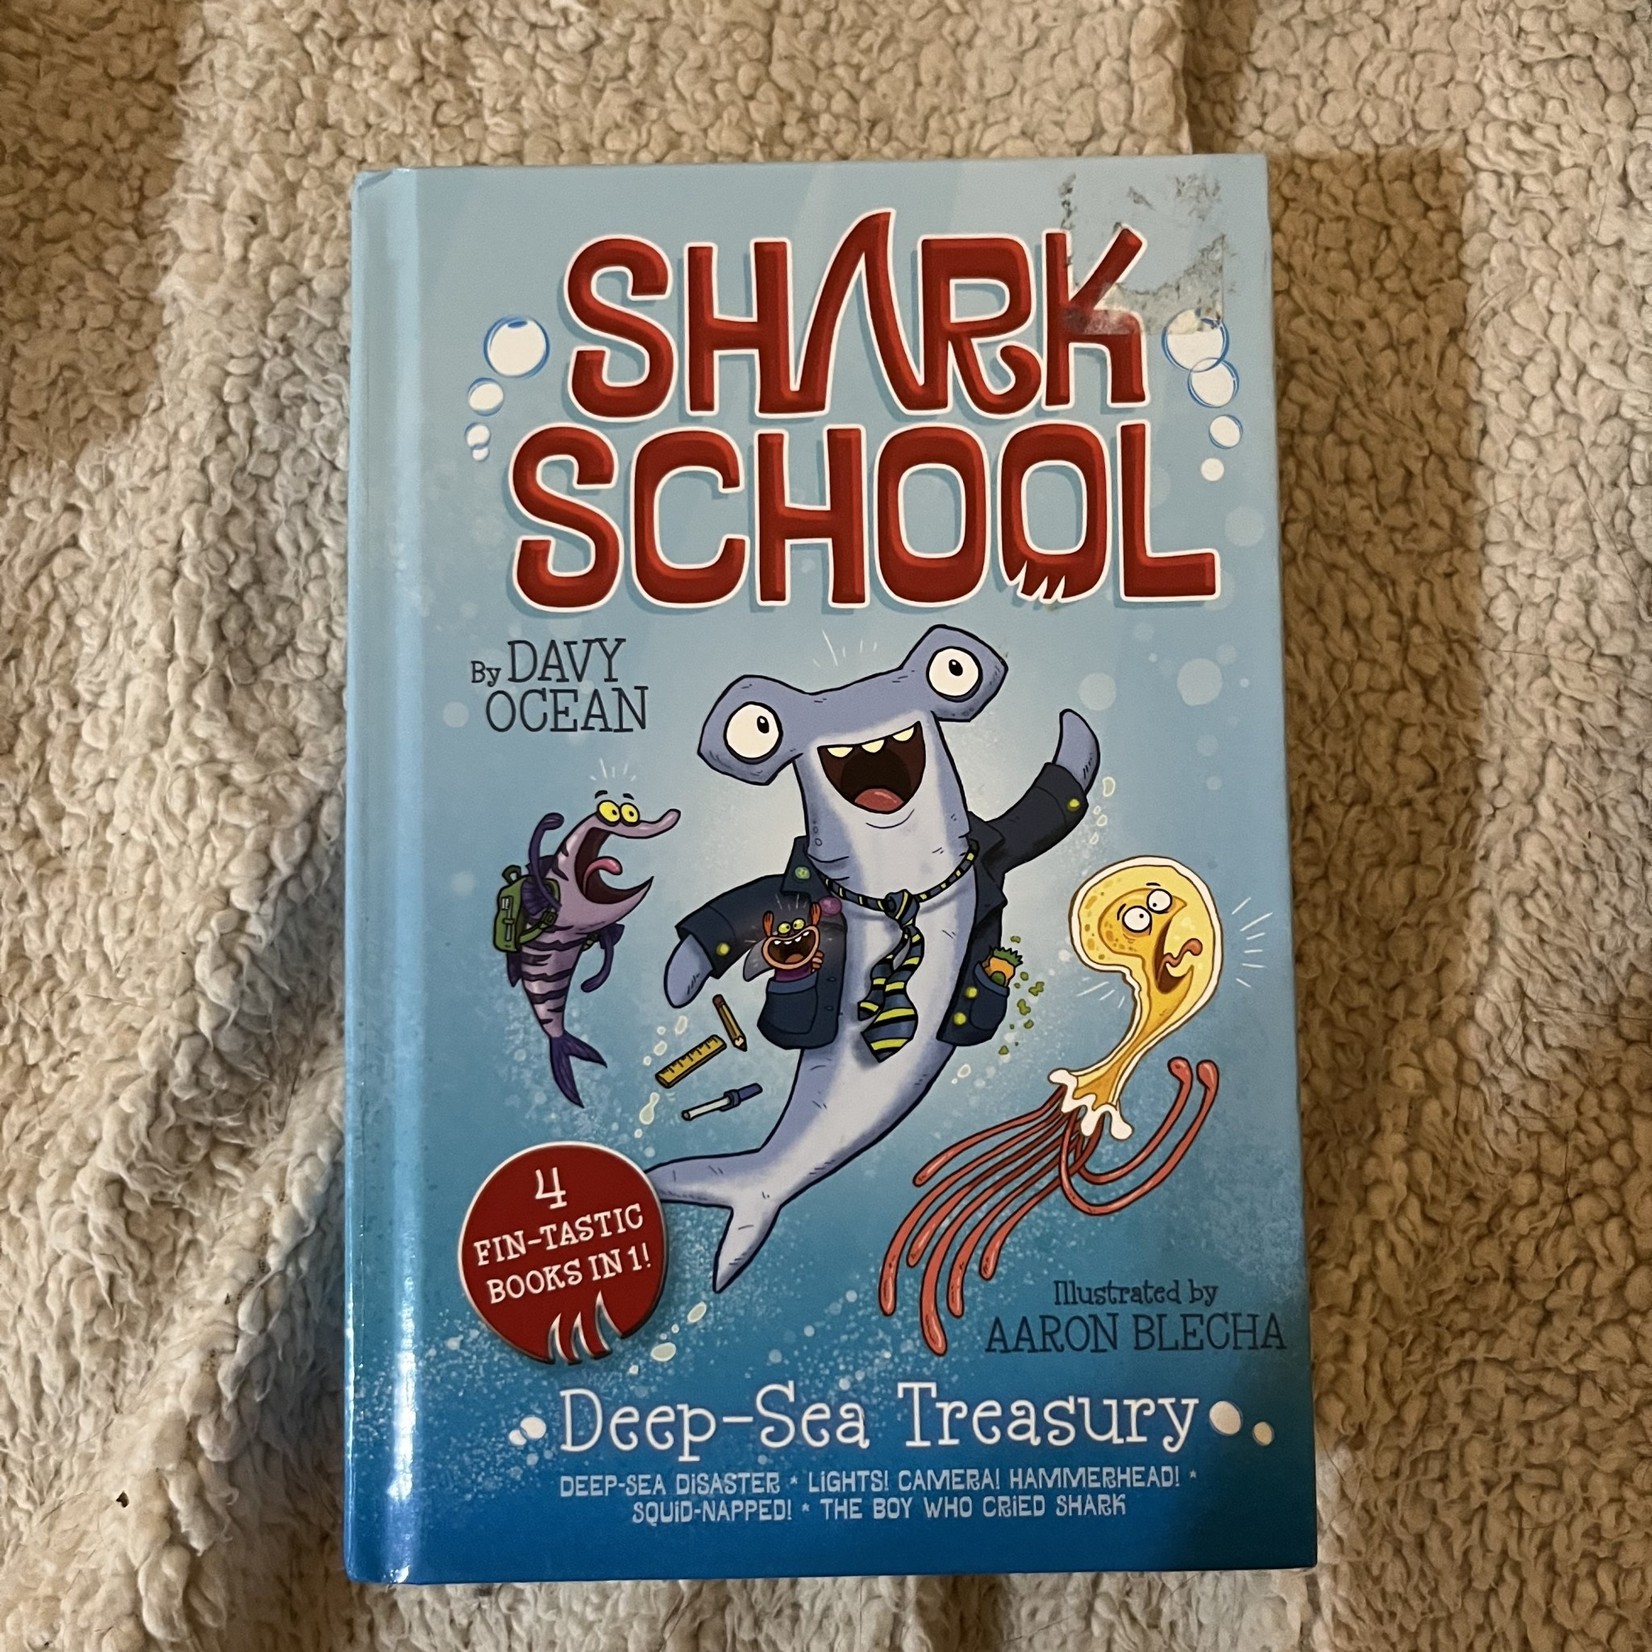 Shark School - 4 Fin-Tastic Books in 1!